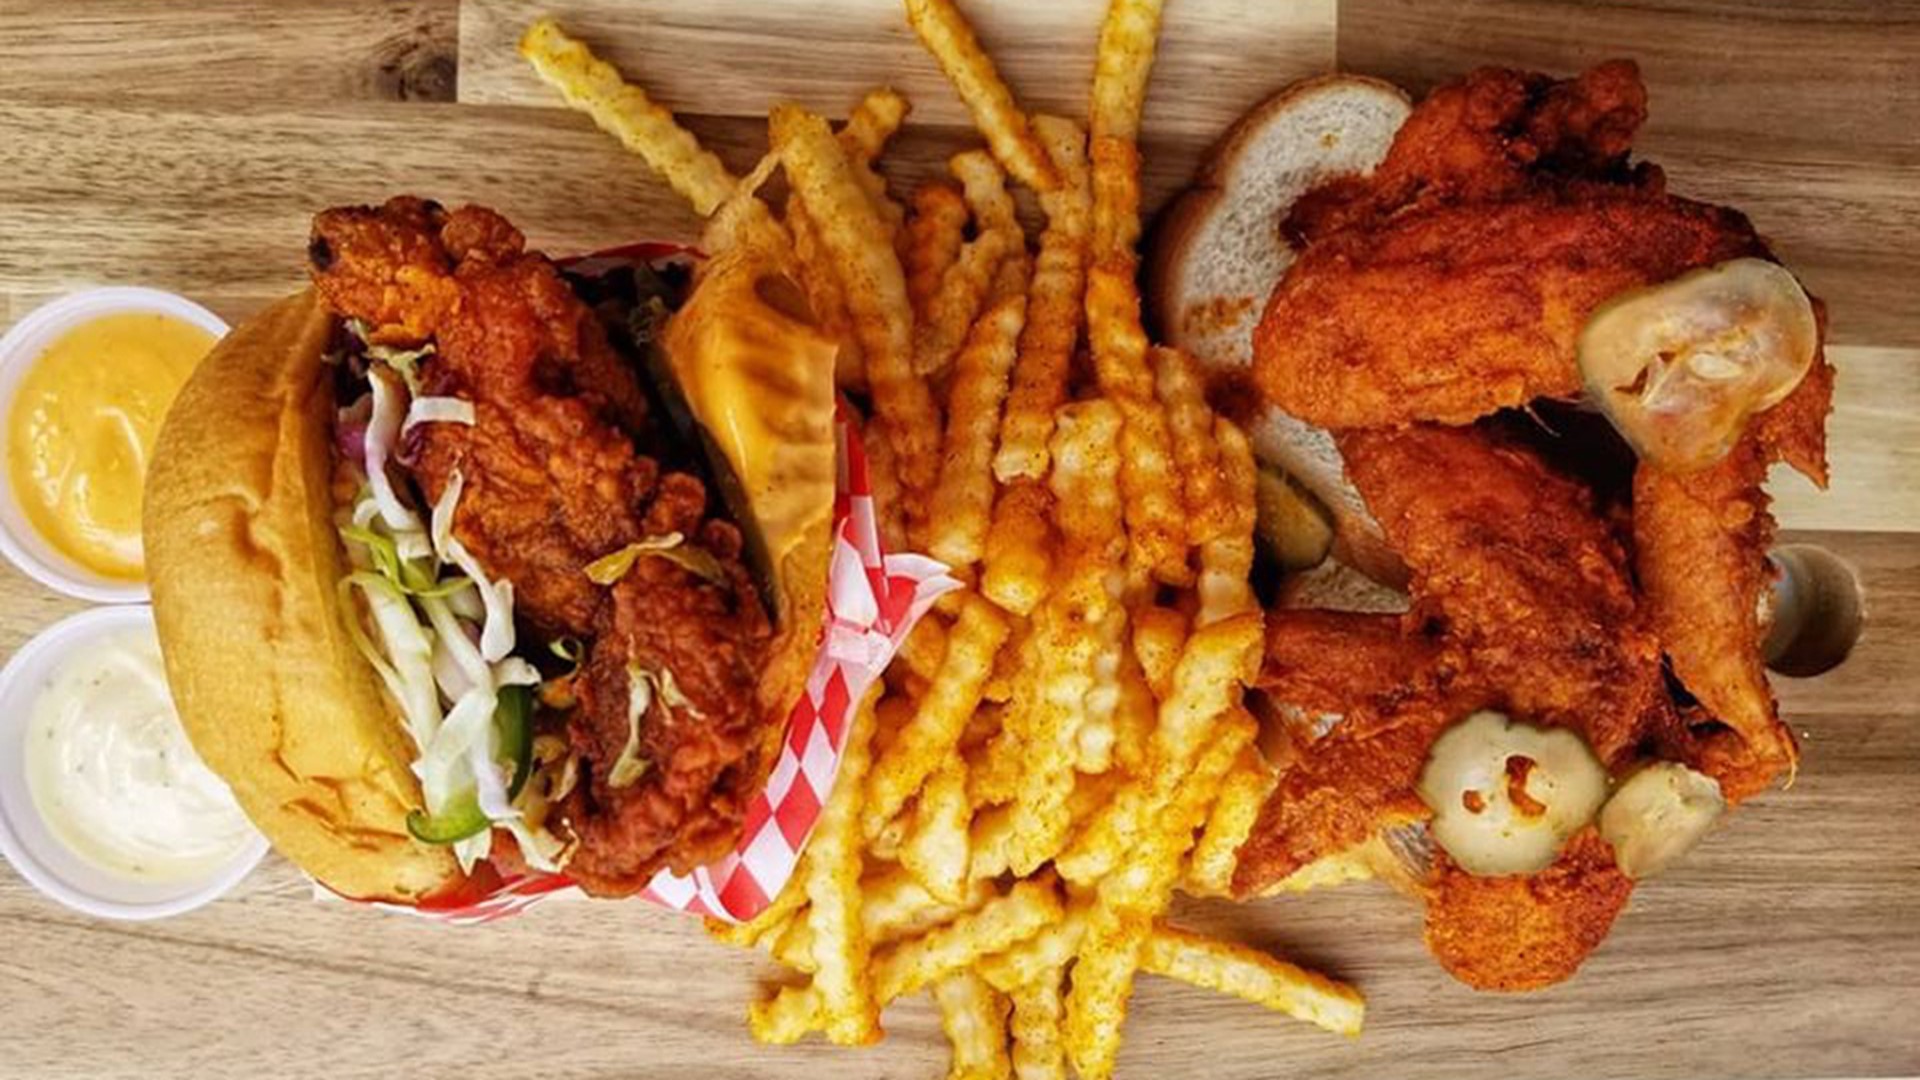 Sacramento hot chicken truck set to open restaurant in 2020 | abc10.com